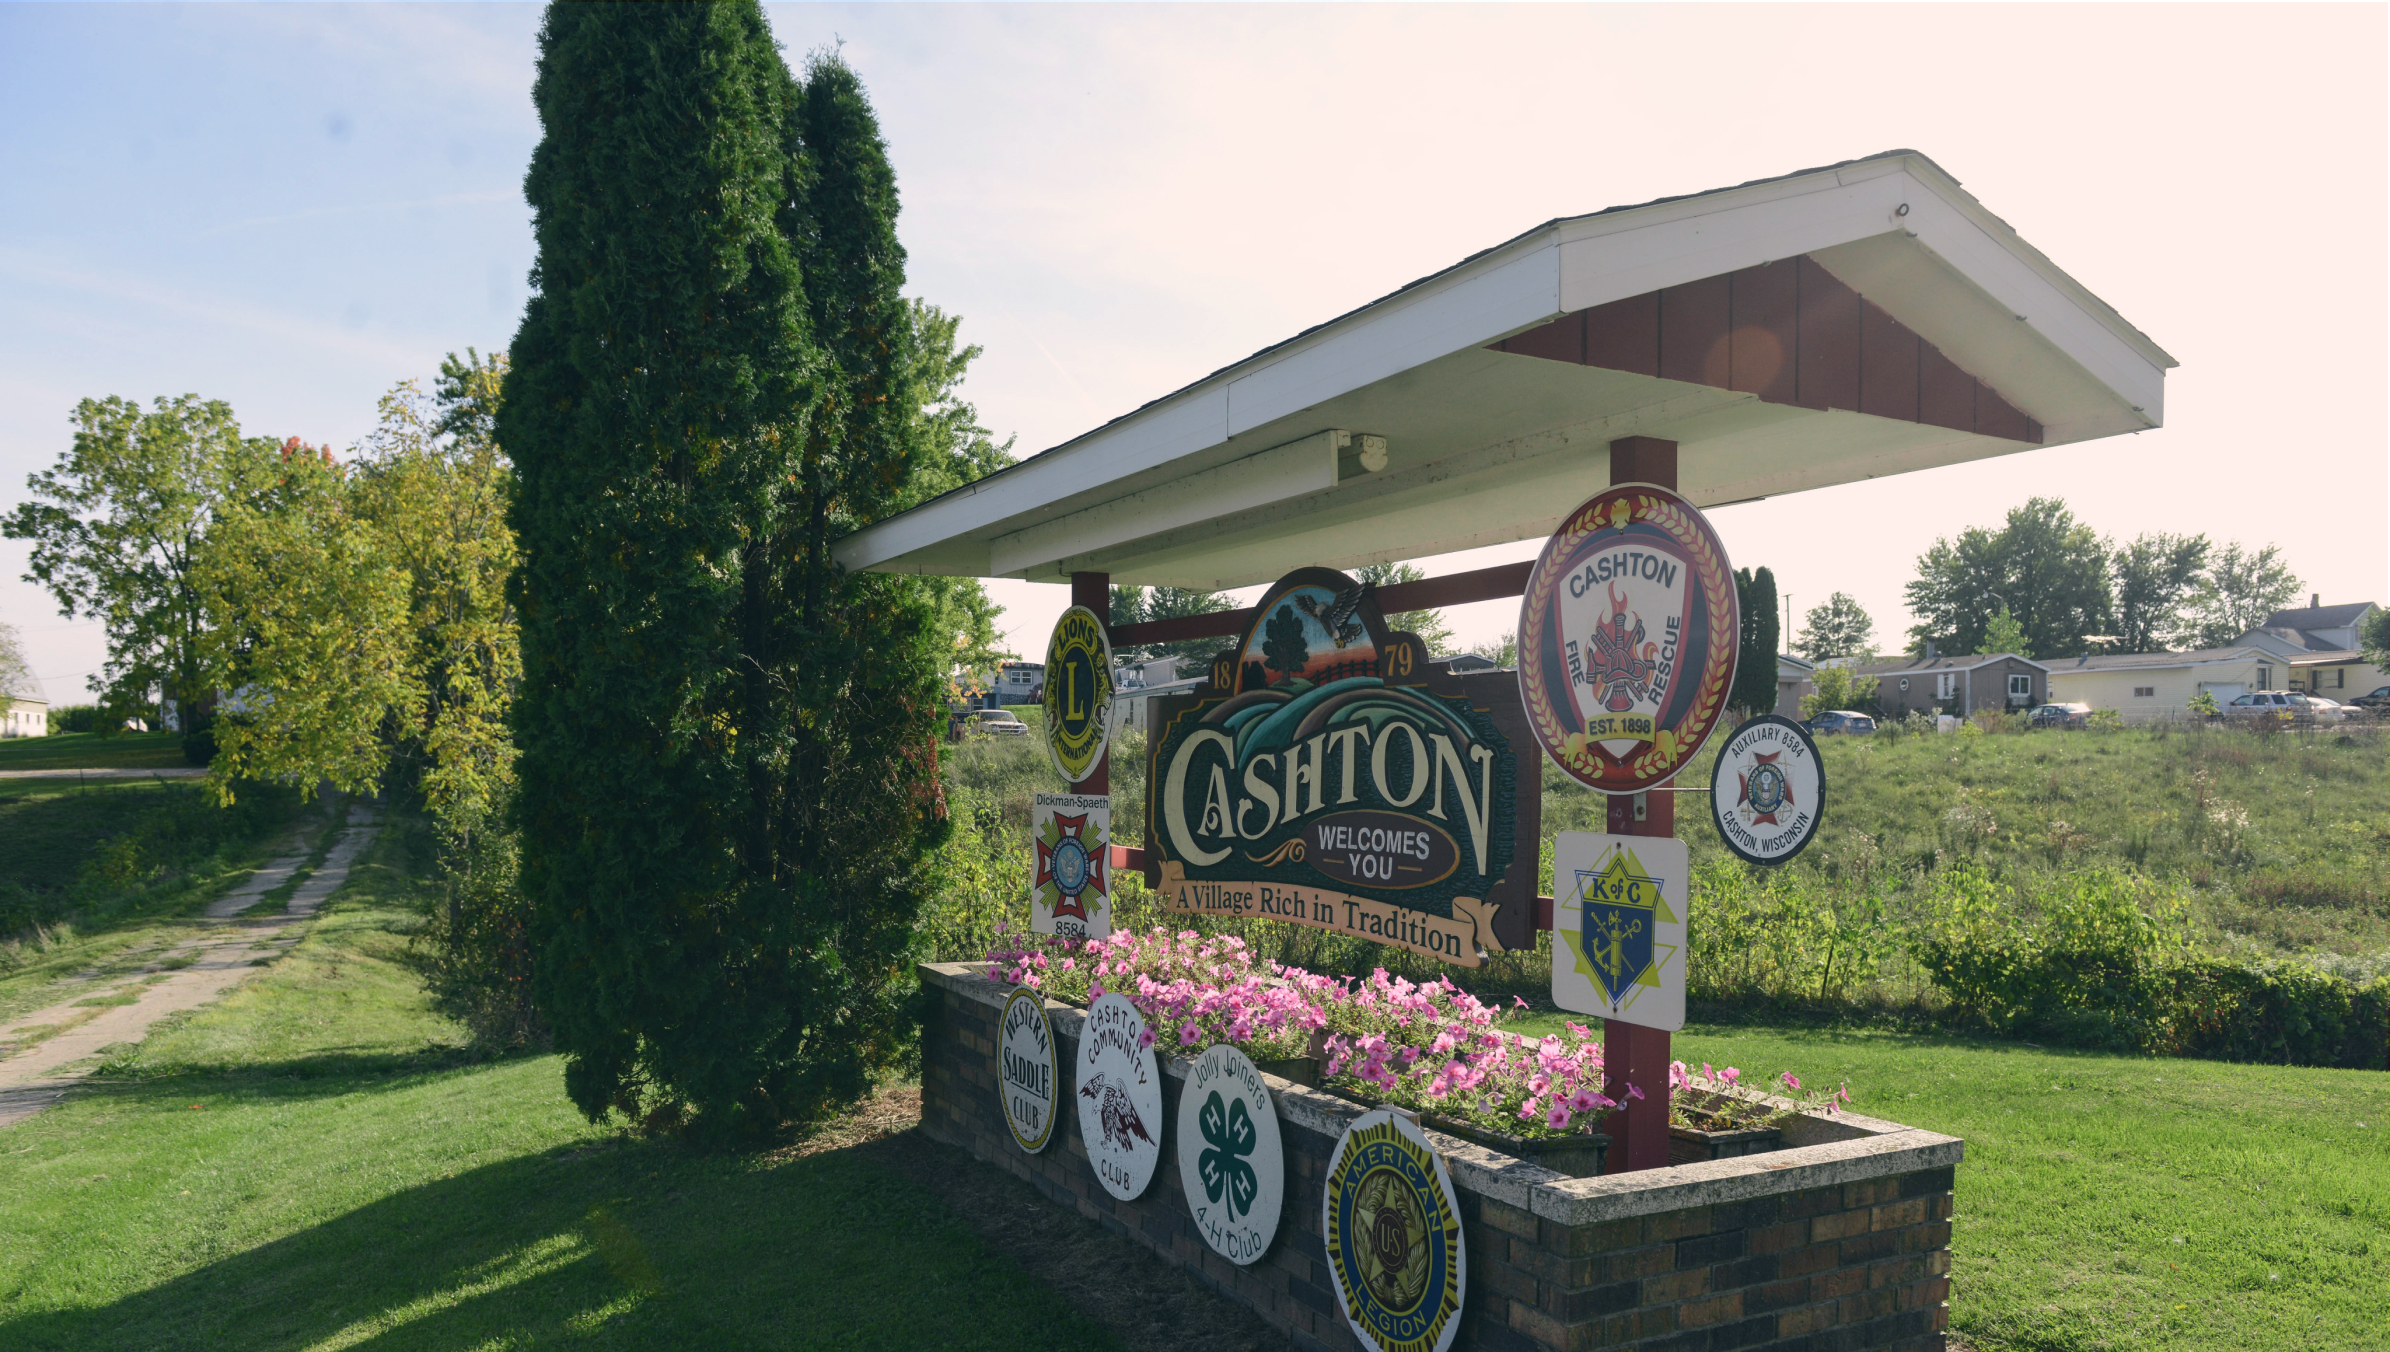 Village of Cashton welcome sign